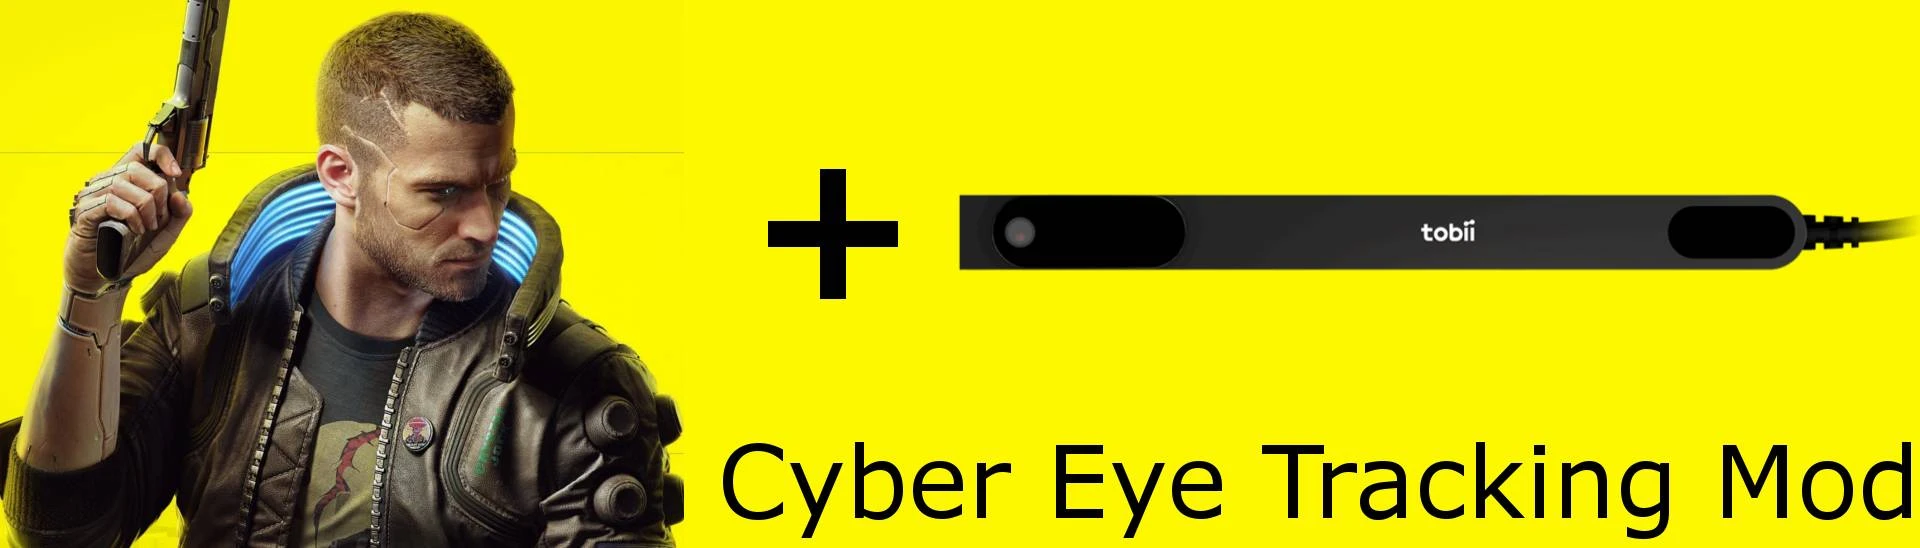 Cyber Eye Tracking at Cyberpunk 2077 Nexus - Mods and community